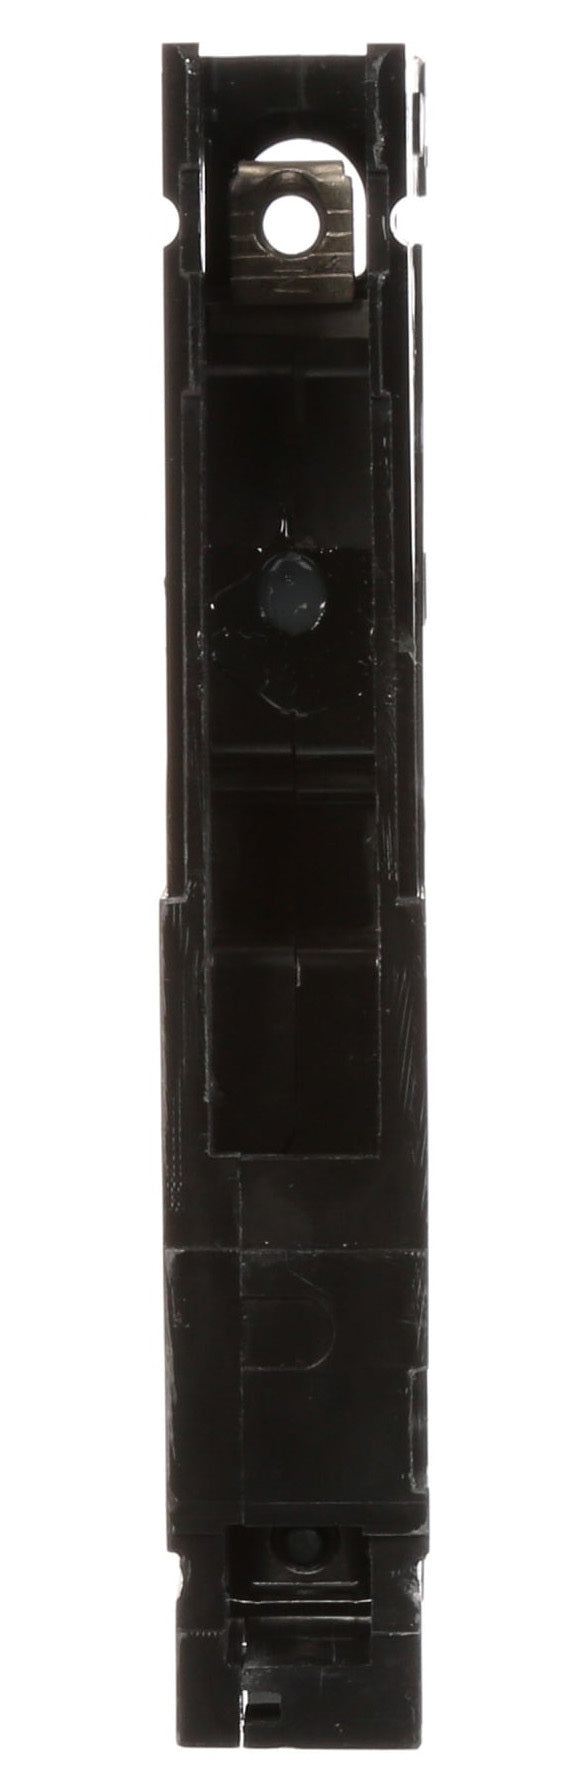 ED21B030 - Siemens - Molded Case Circuit Breaker